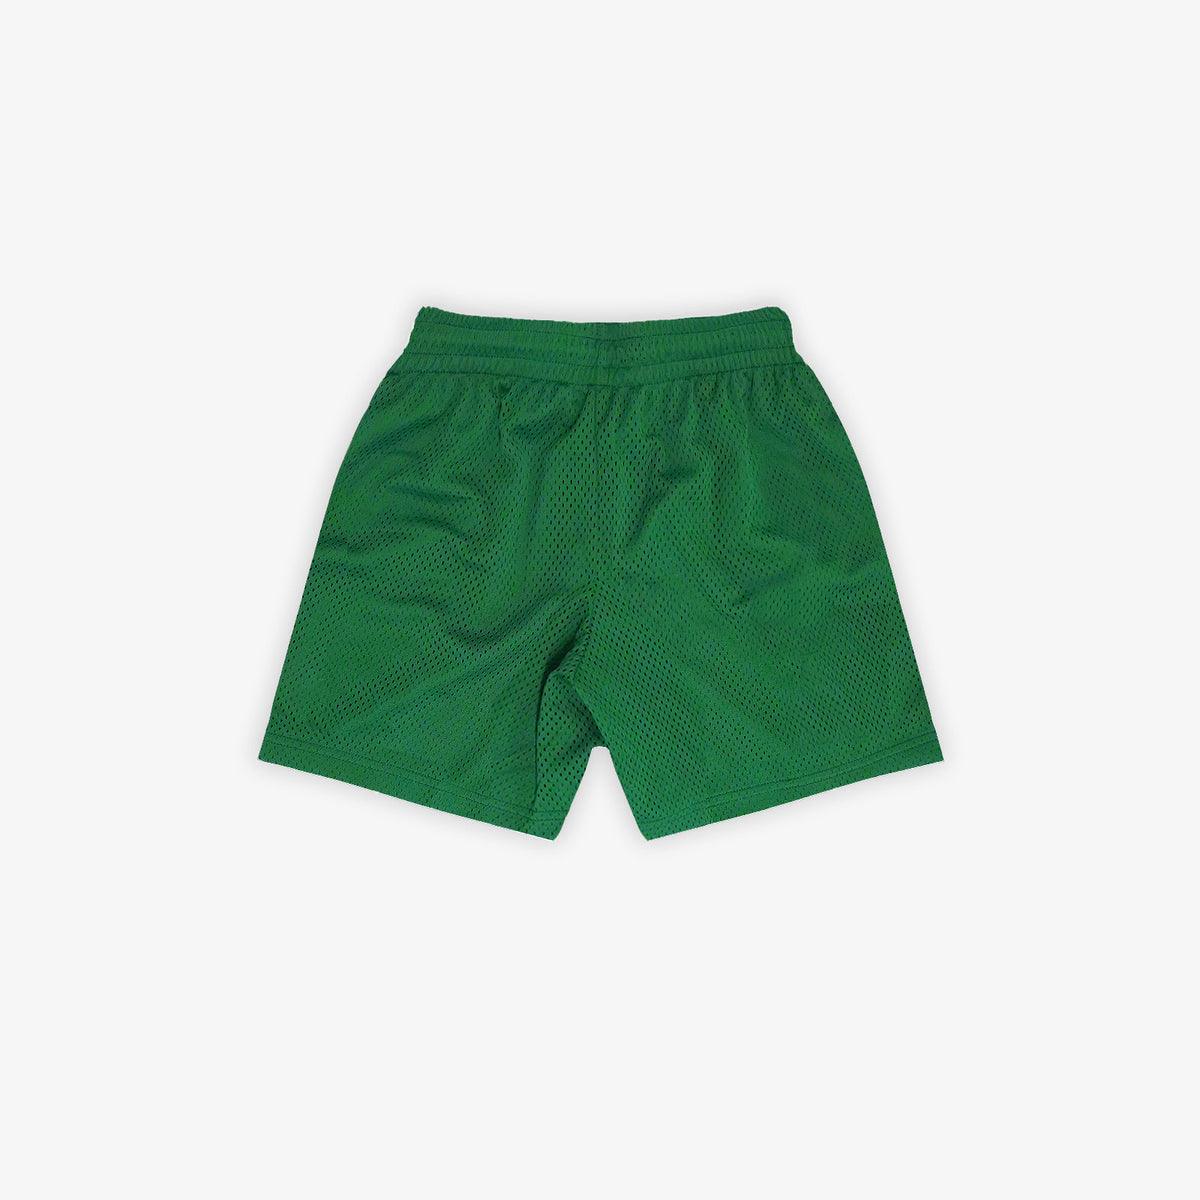 Boston Celtics Dri-FIT Play Youth Shorts - Green